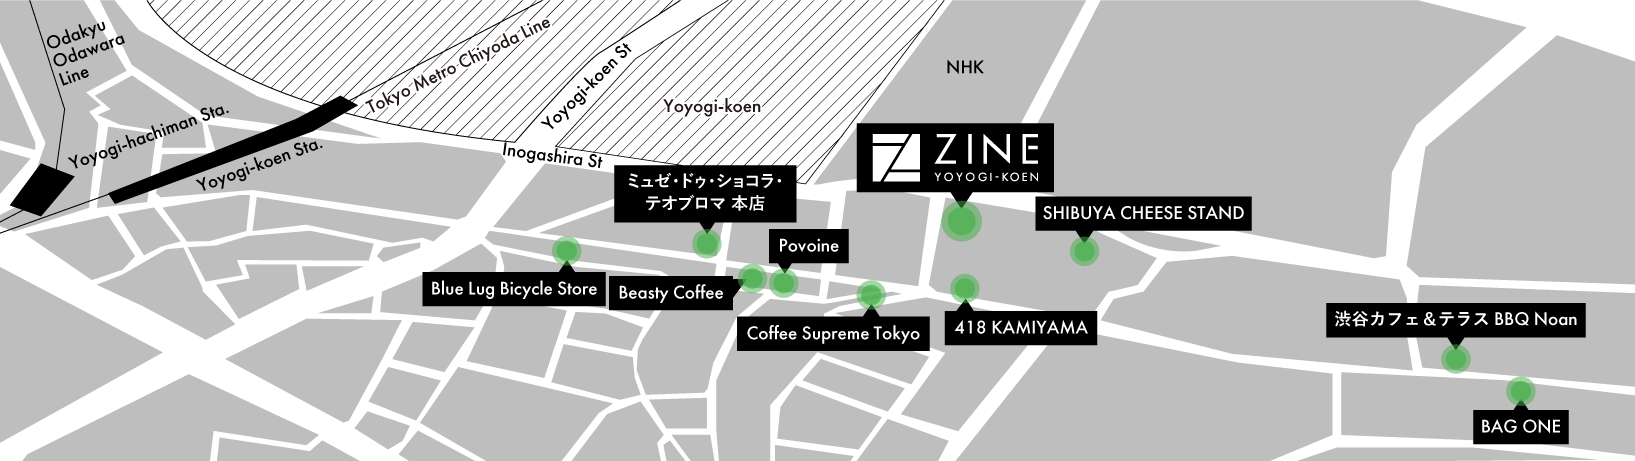 ZINE YOYOGI_KOENの周辺マップ